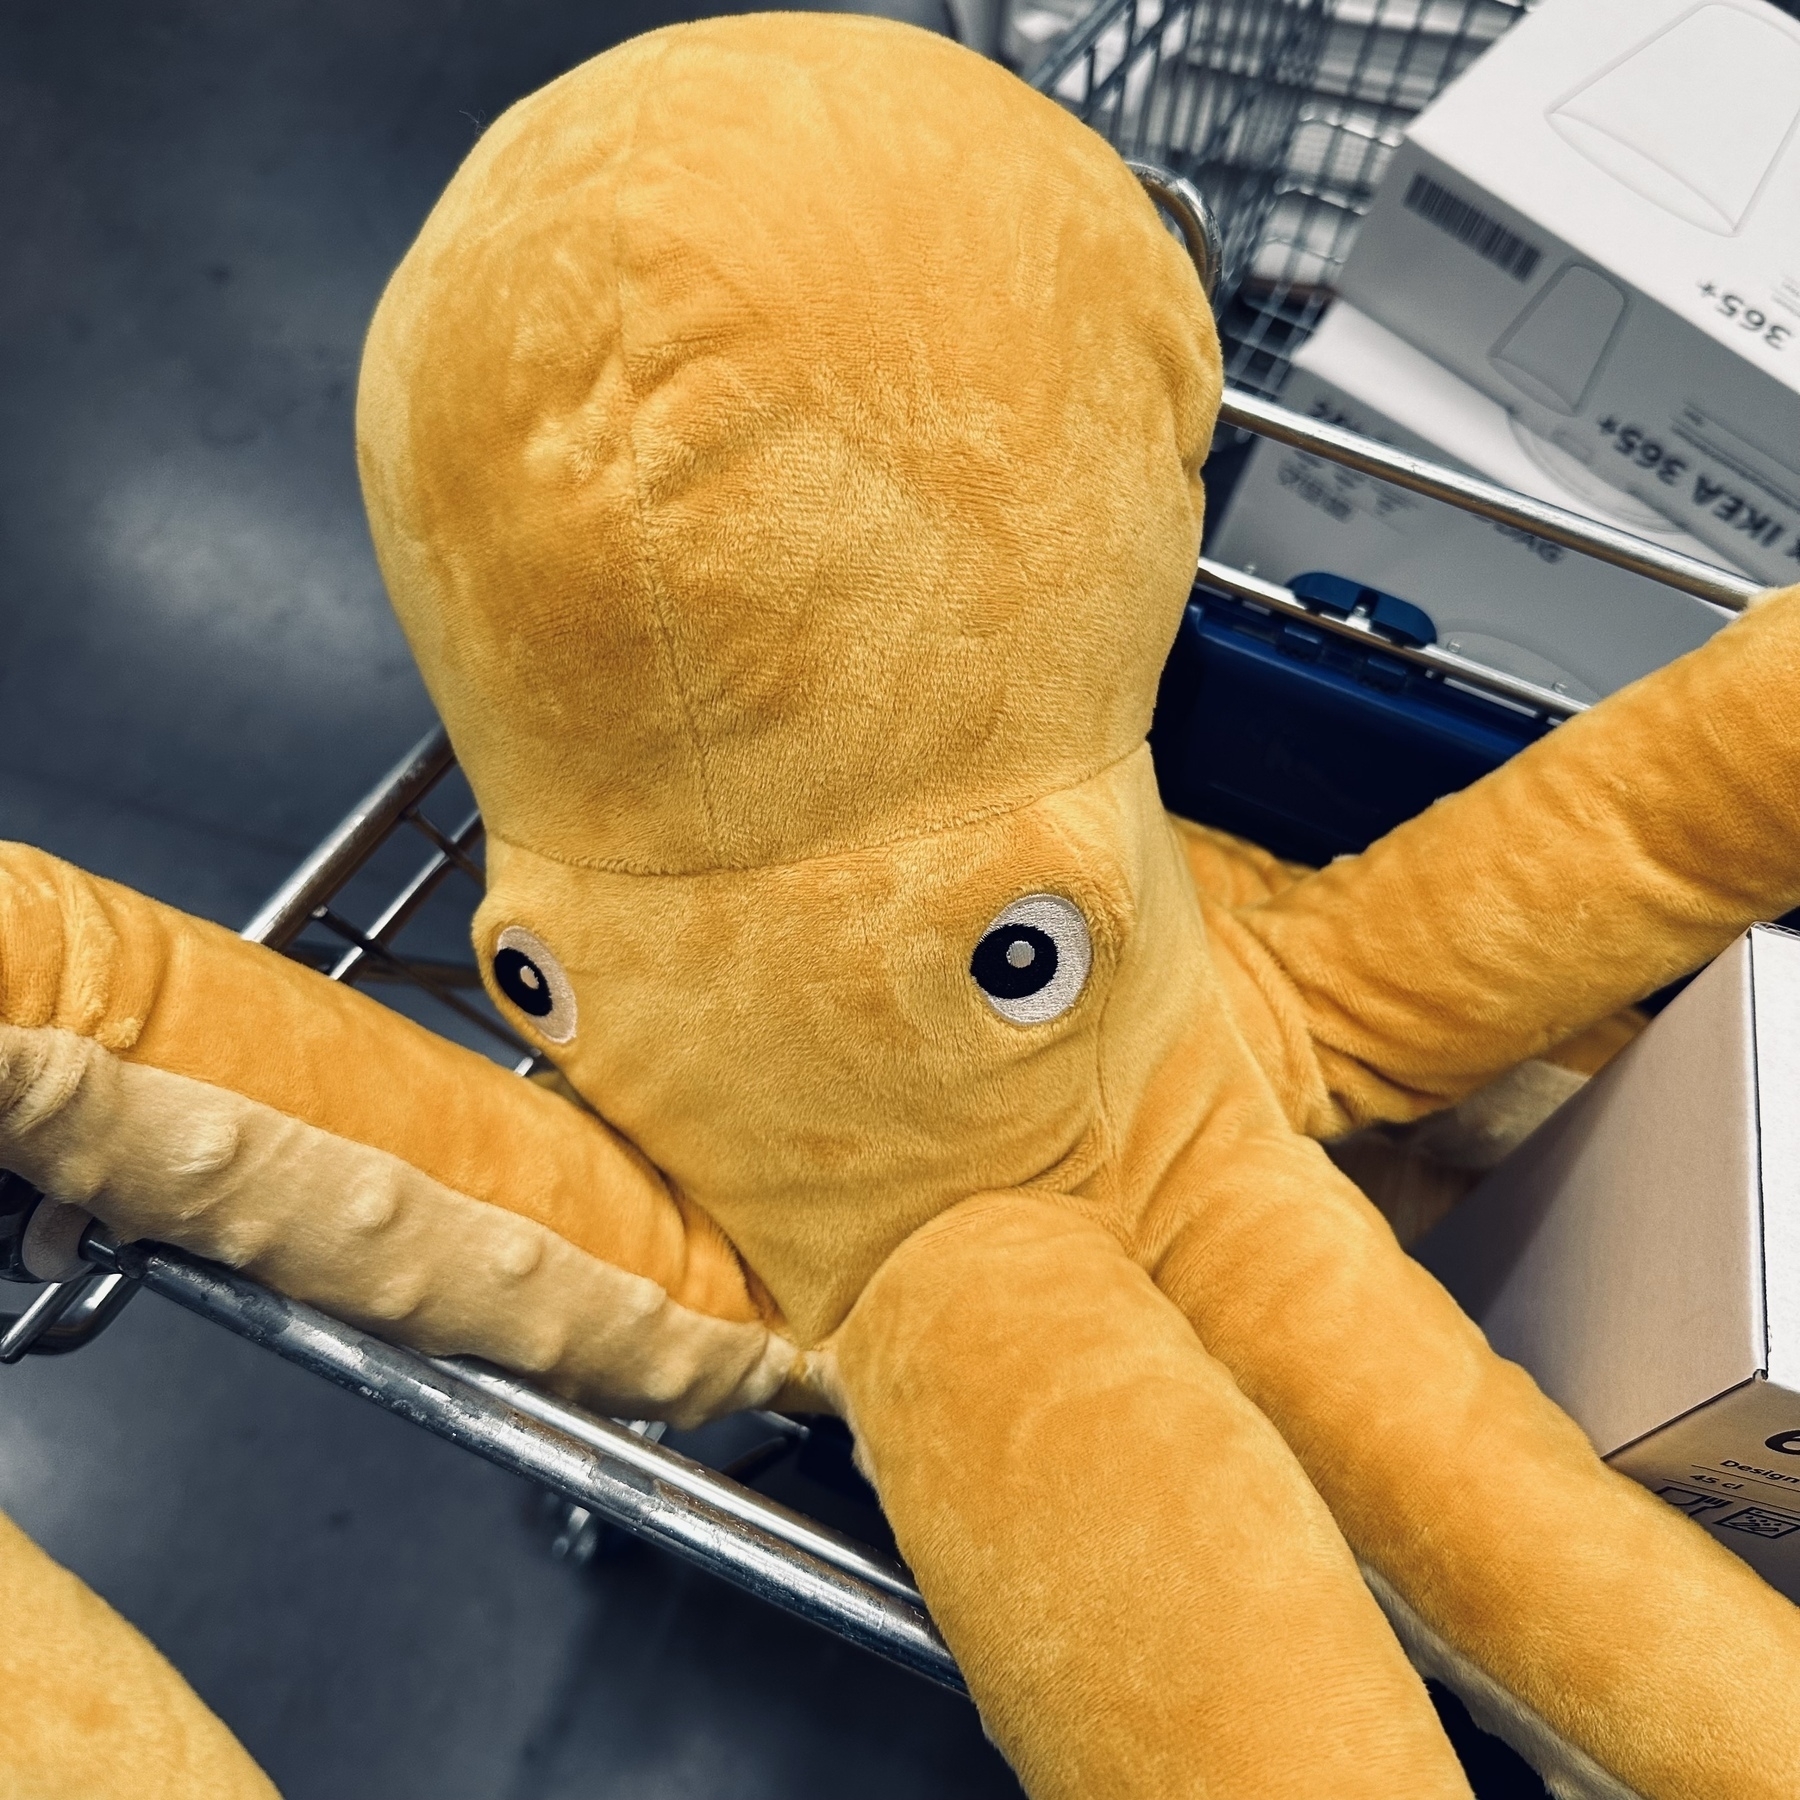 Stuffed animal octopus in shopping cart.